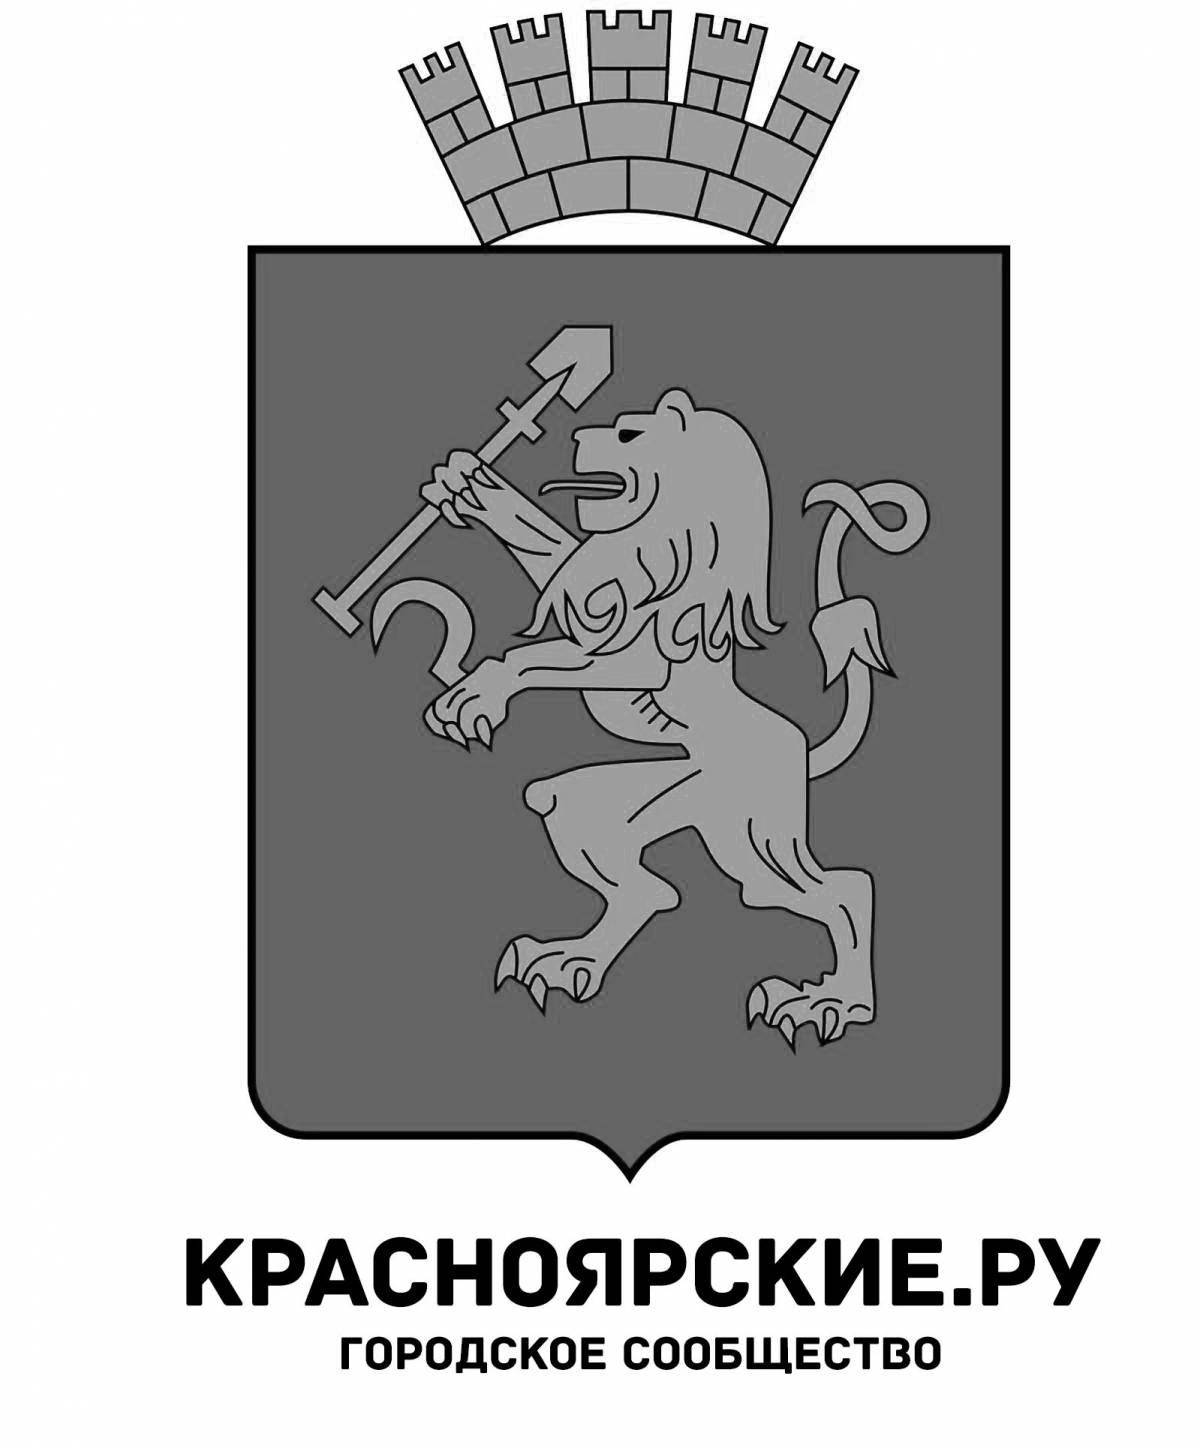 Emblem of Krasnoyarsk #3